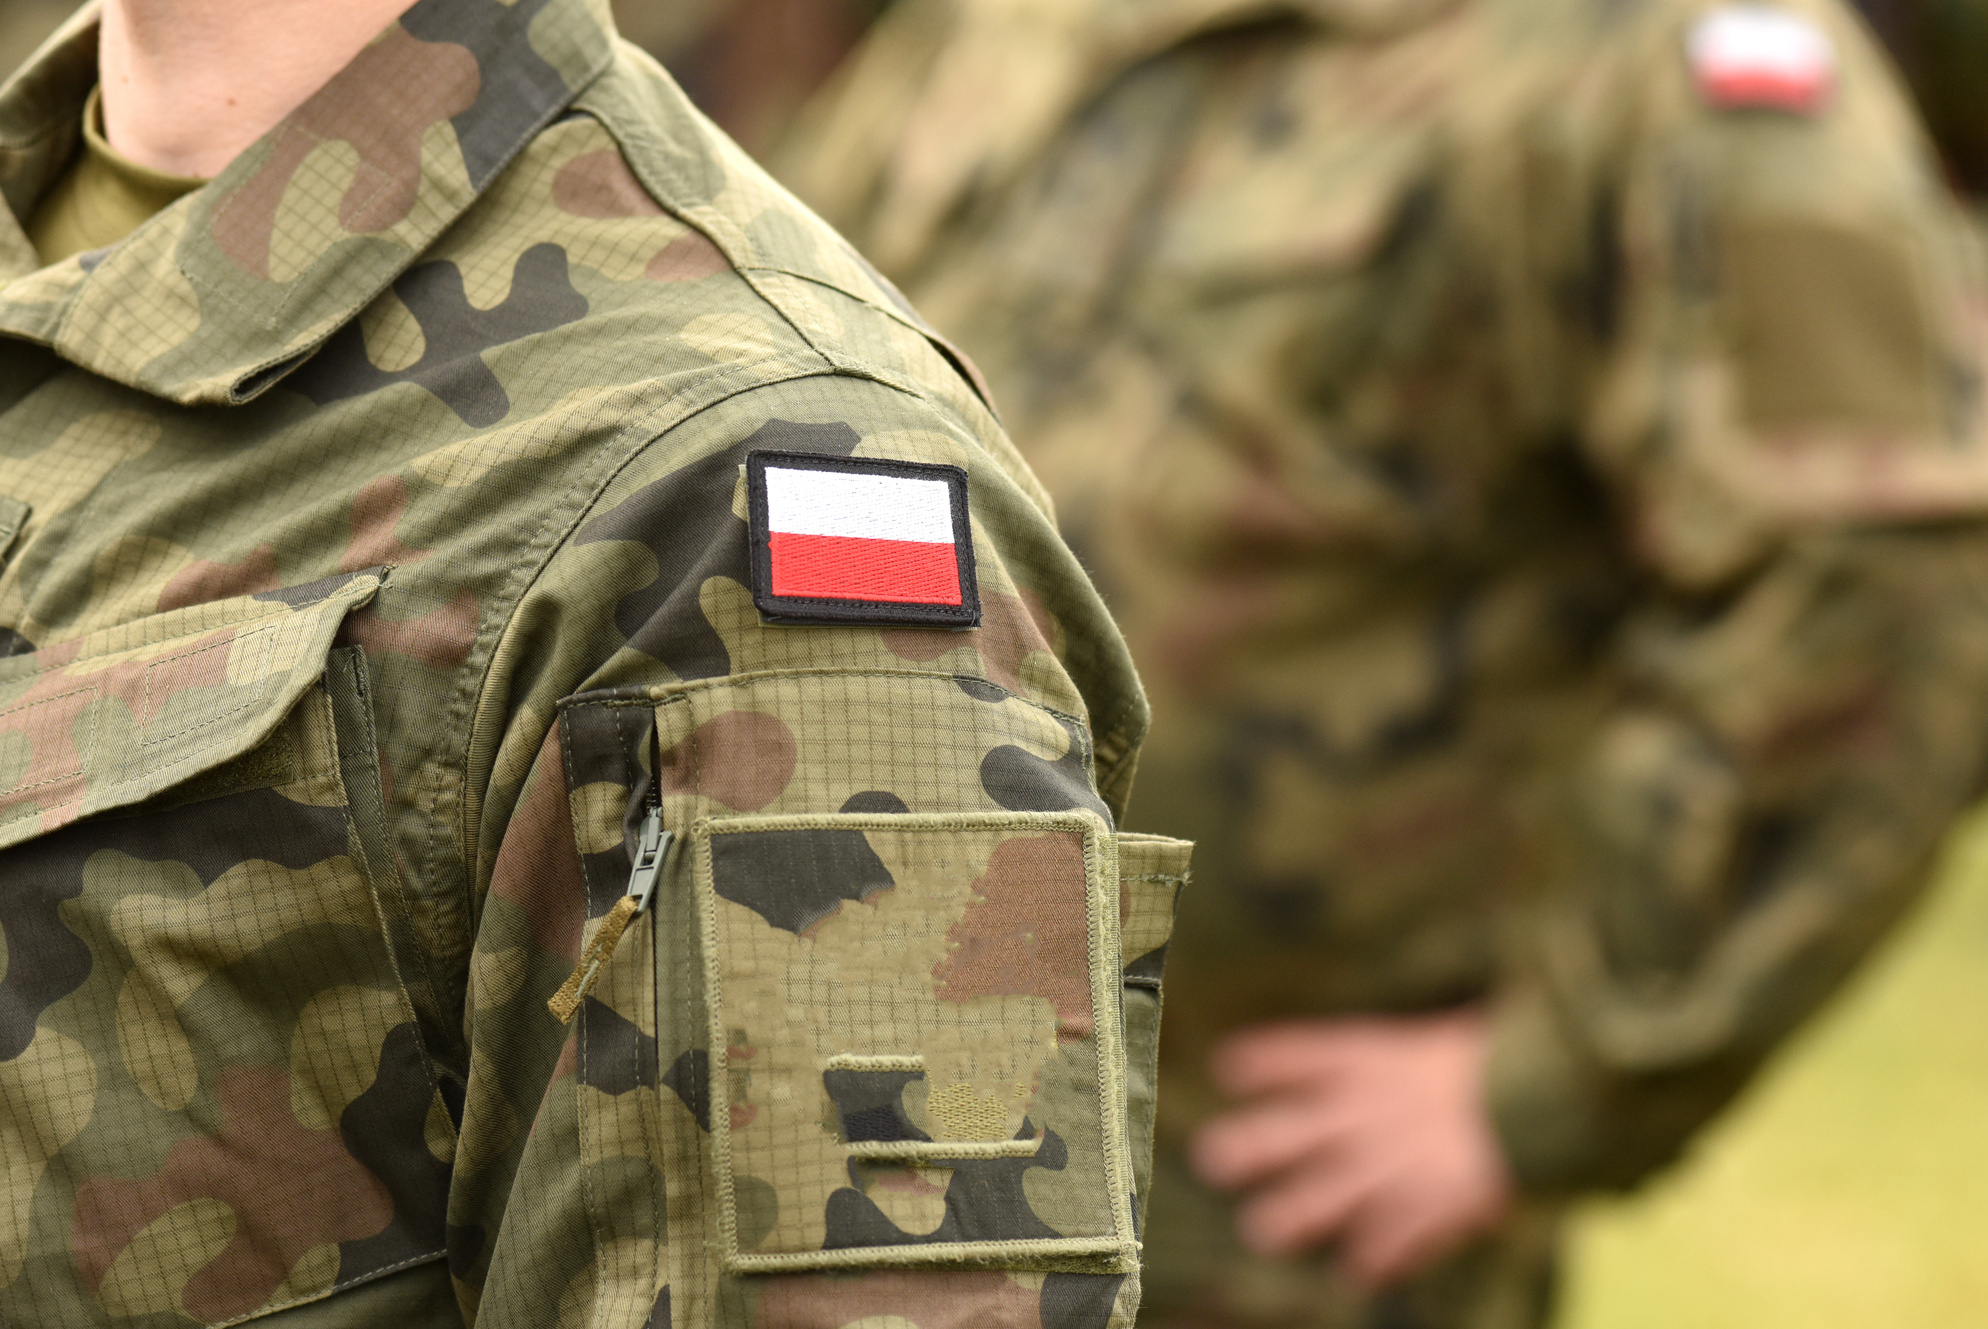 Polish Flag Patch on Soldiers Uniform